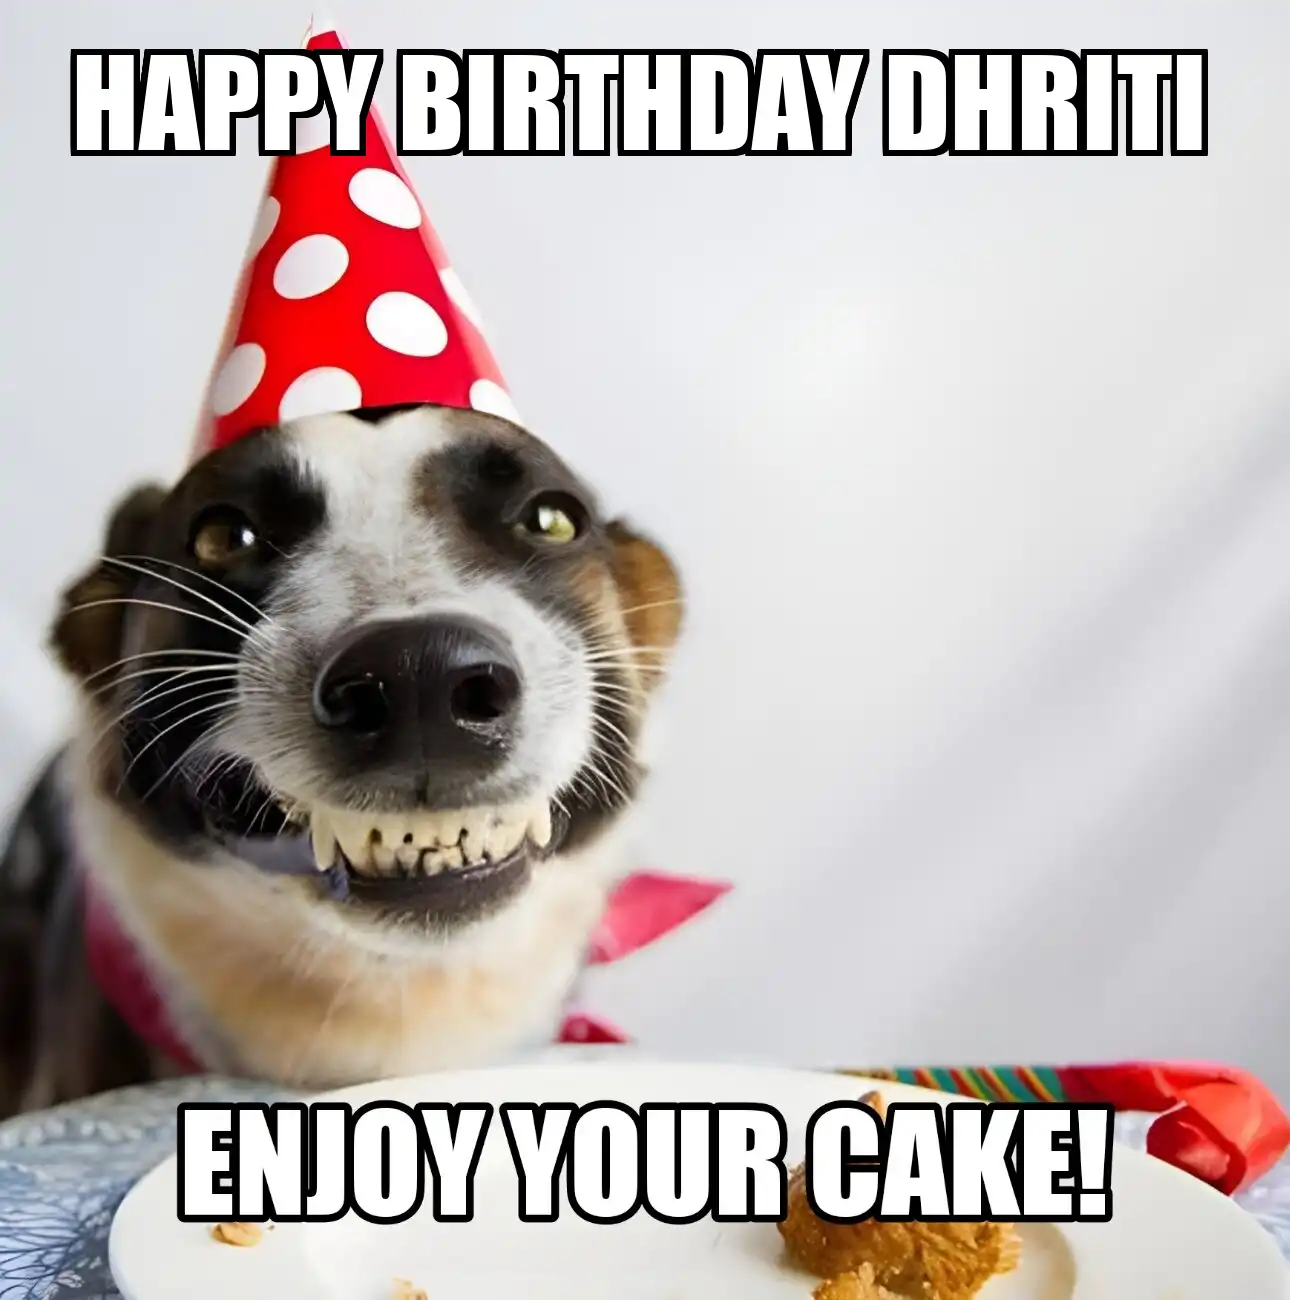 Happy Birthday Dhriti Enjoy Your Cake Dog Meme